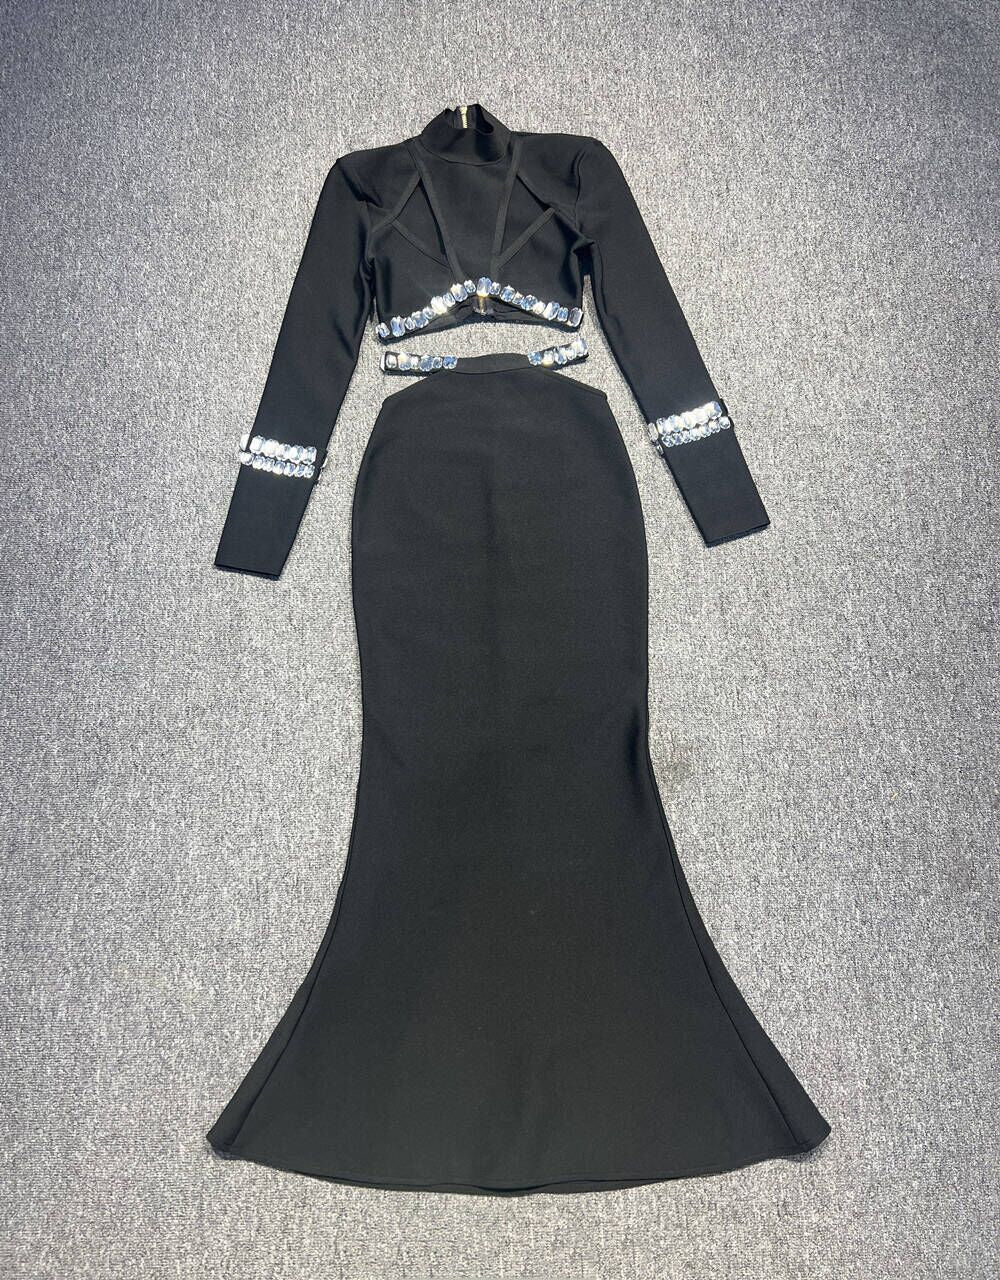 Jessica Diamond Hollow-Out Top & Maxi Skirt Set - Hot fashionista